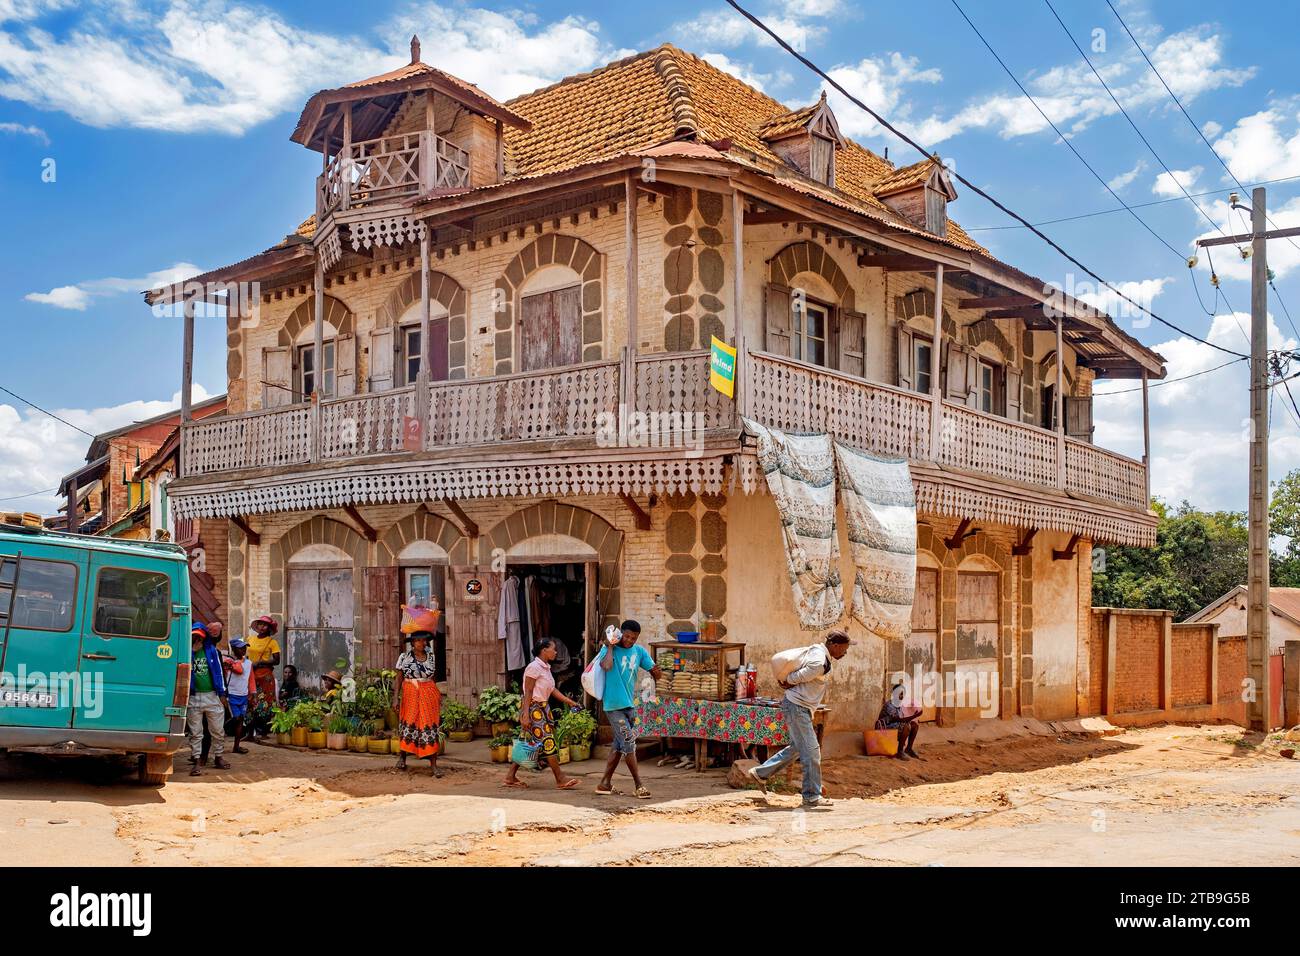 Altes französisches Kolonialgebäude mit Holzbalkonen in der Stadt Ambalavao, Haute Matsiatra, Central Highlands, Madagaskar, Afrika Stockfoto